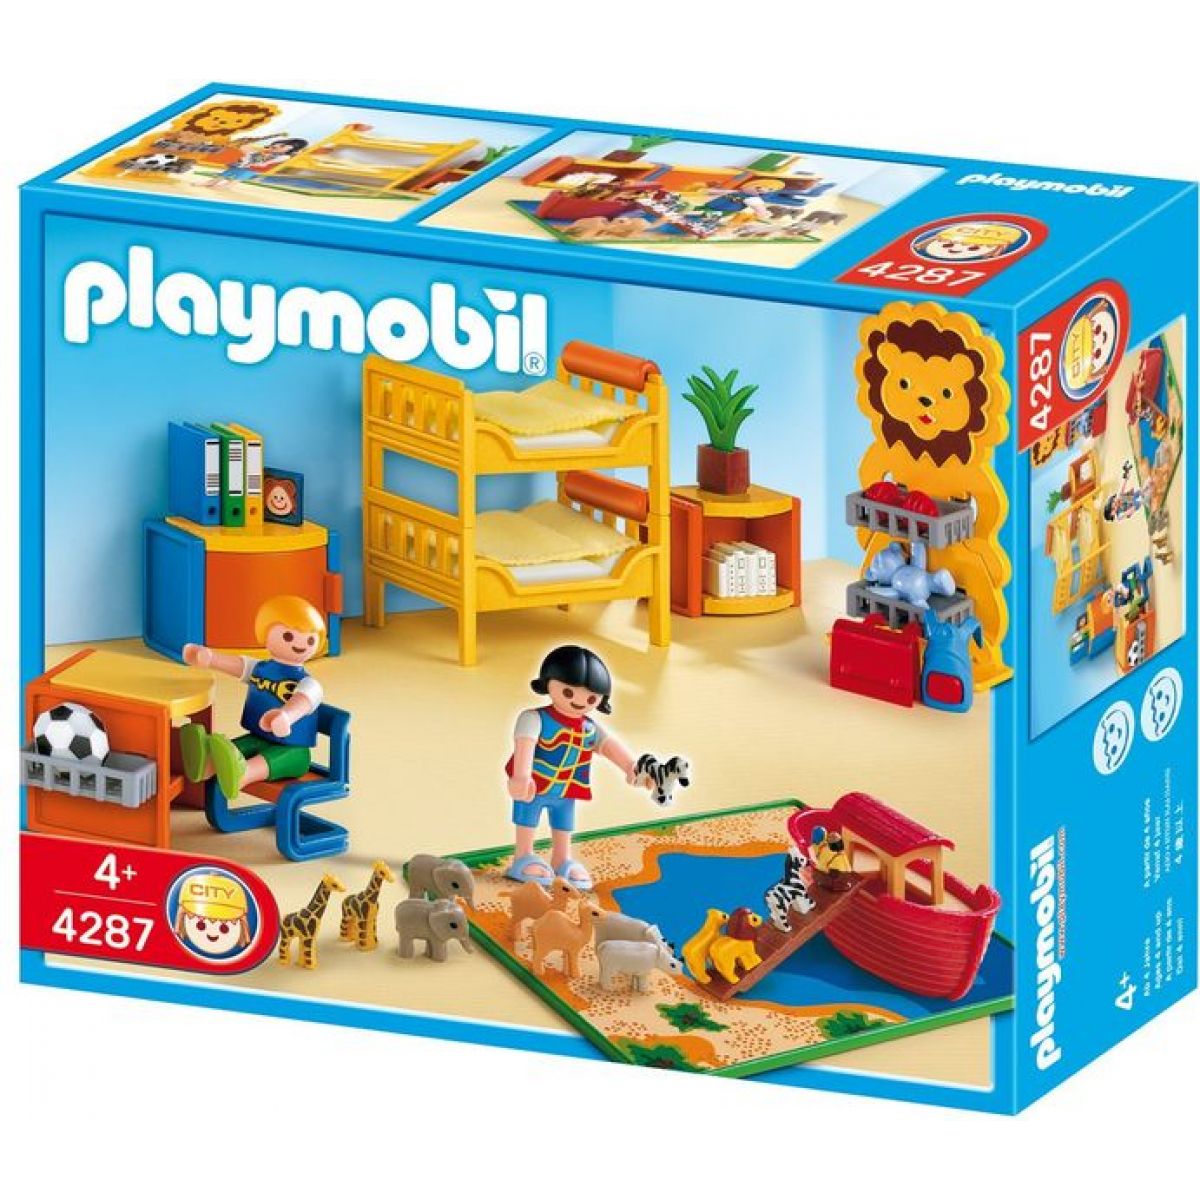 Playmobil 4287 - Dětský pokoj